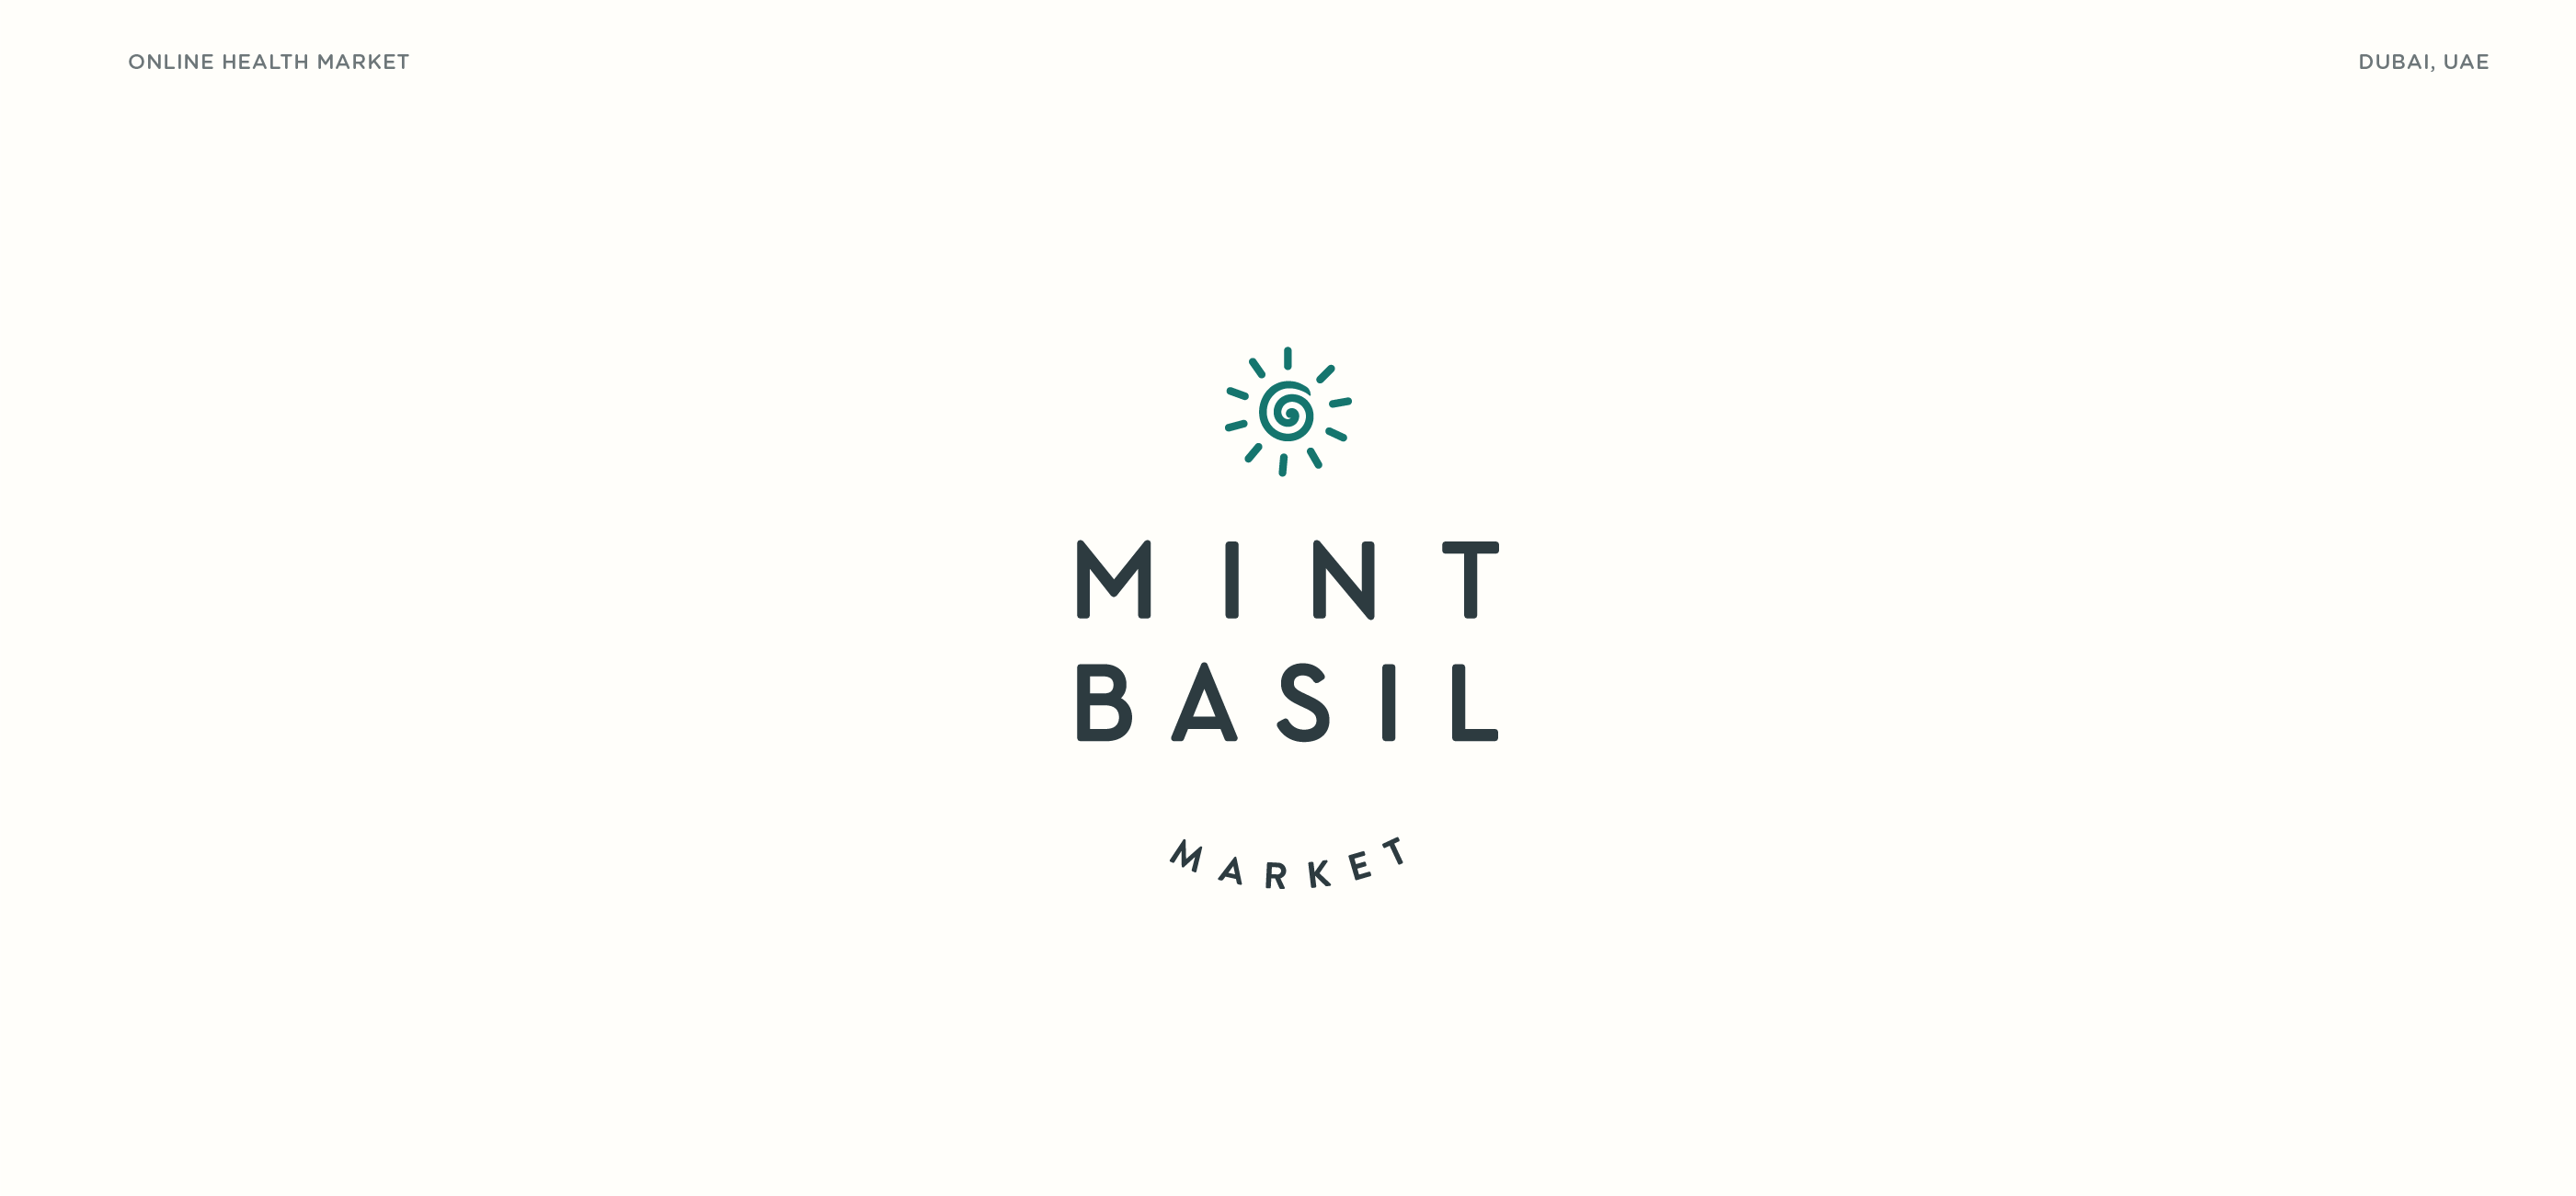 Mint Basil – health store